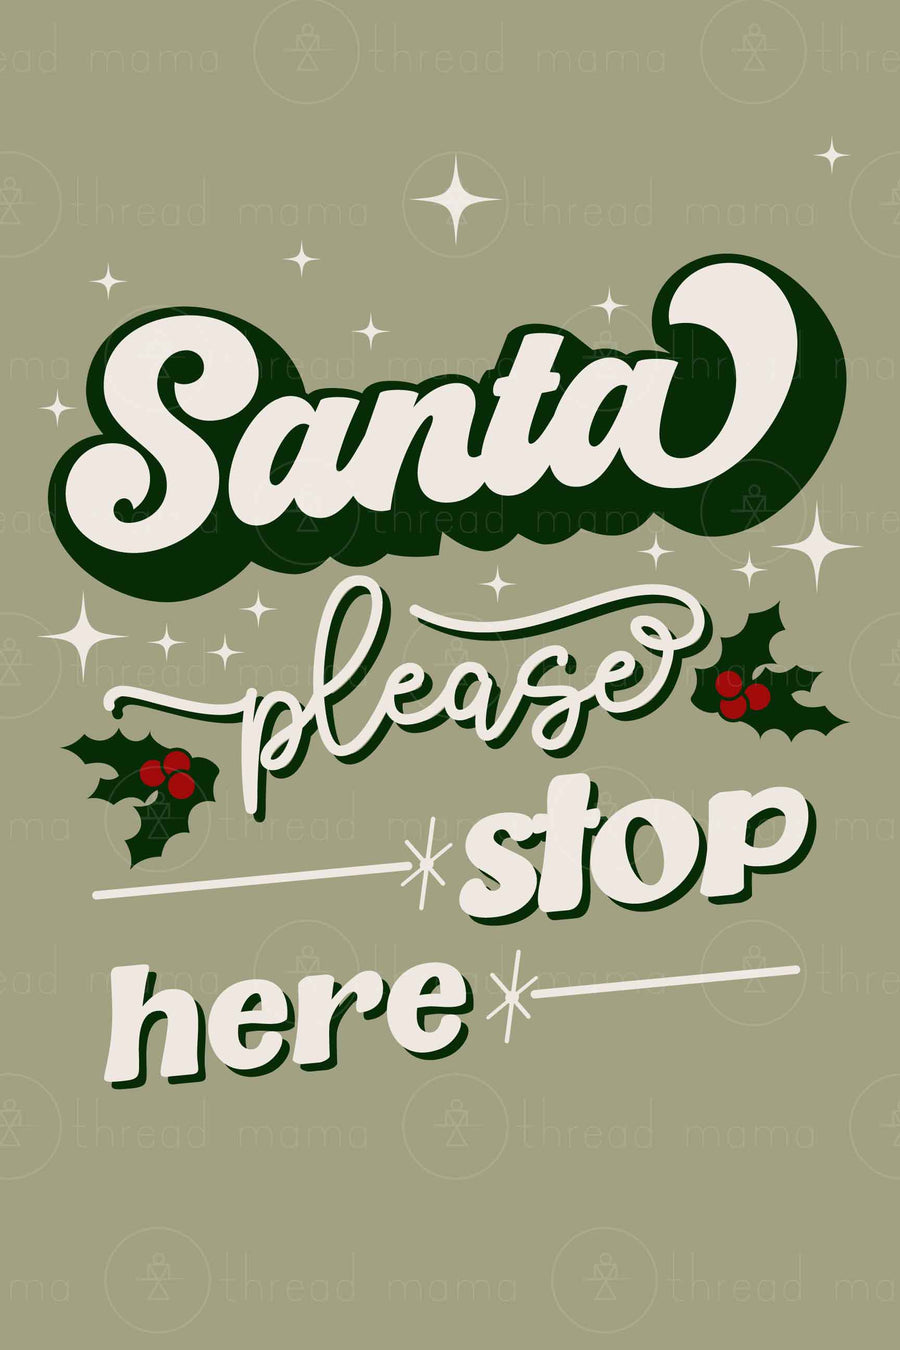 Santa Please Stop Here (Printable Poster)